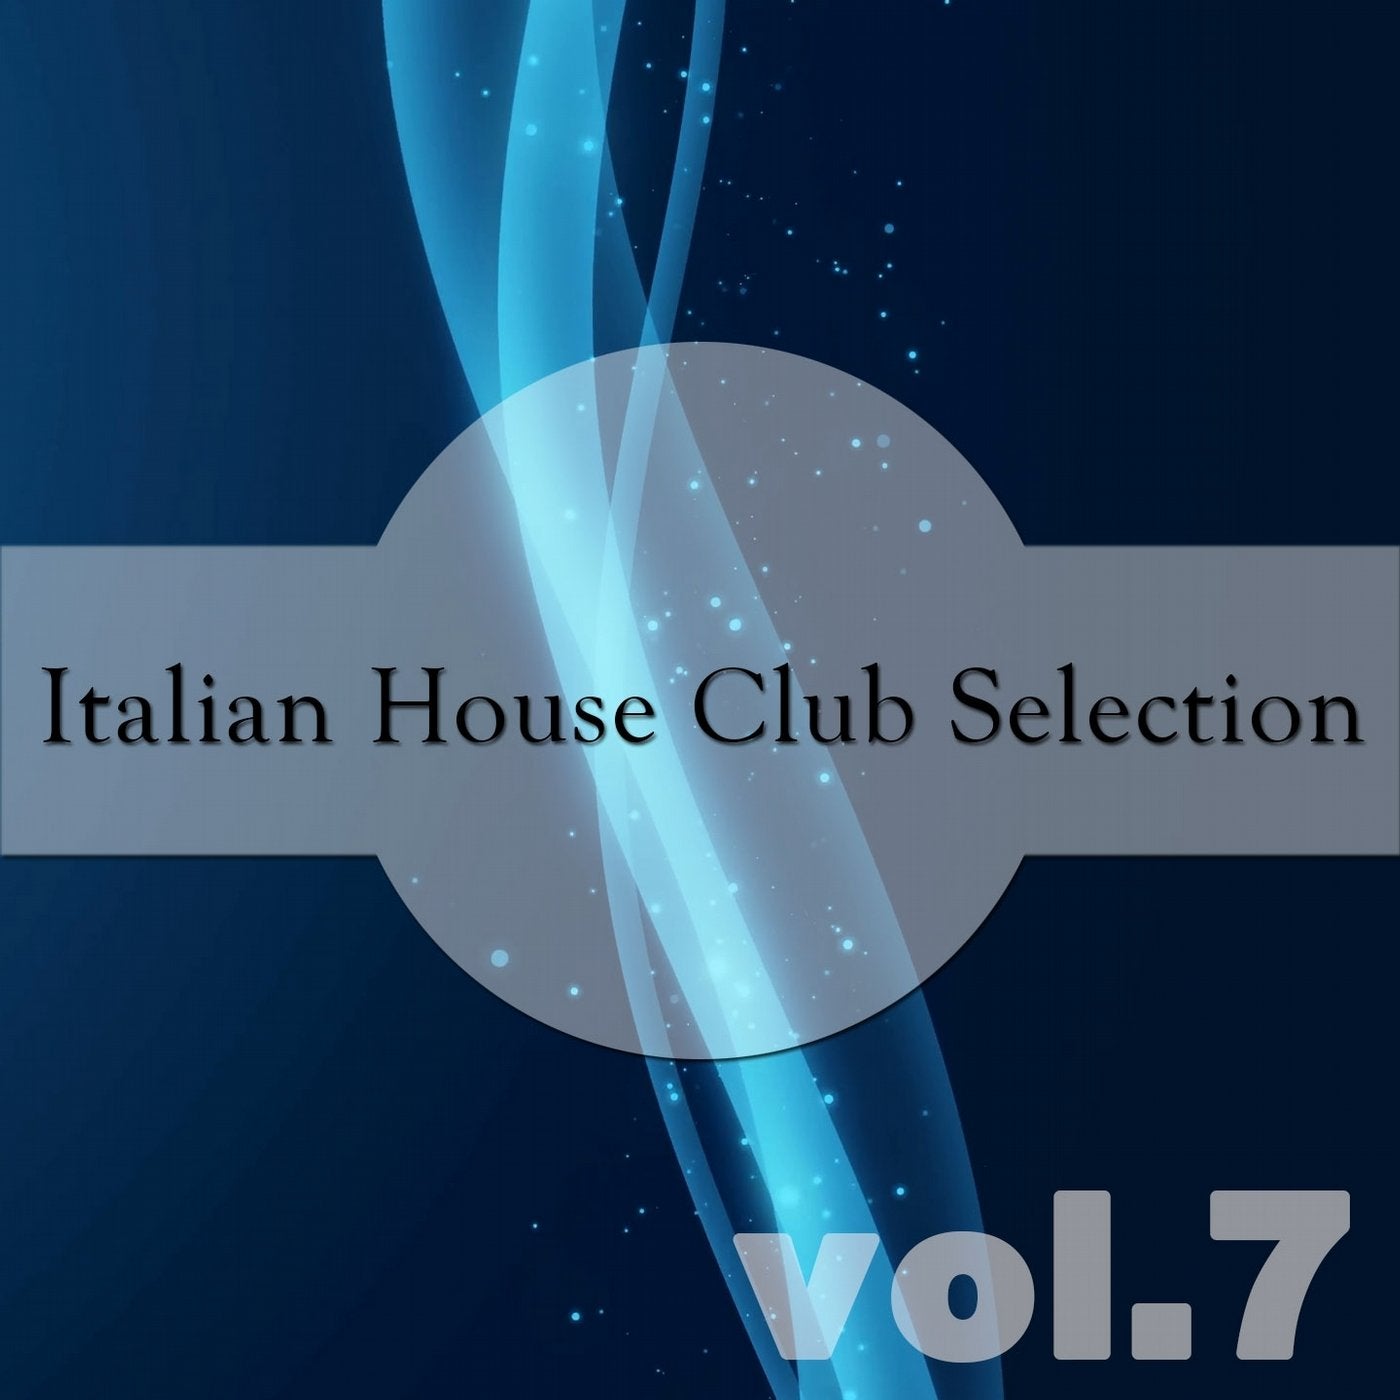 Italian House Club Selection, Vol. 7